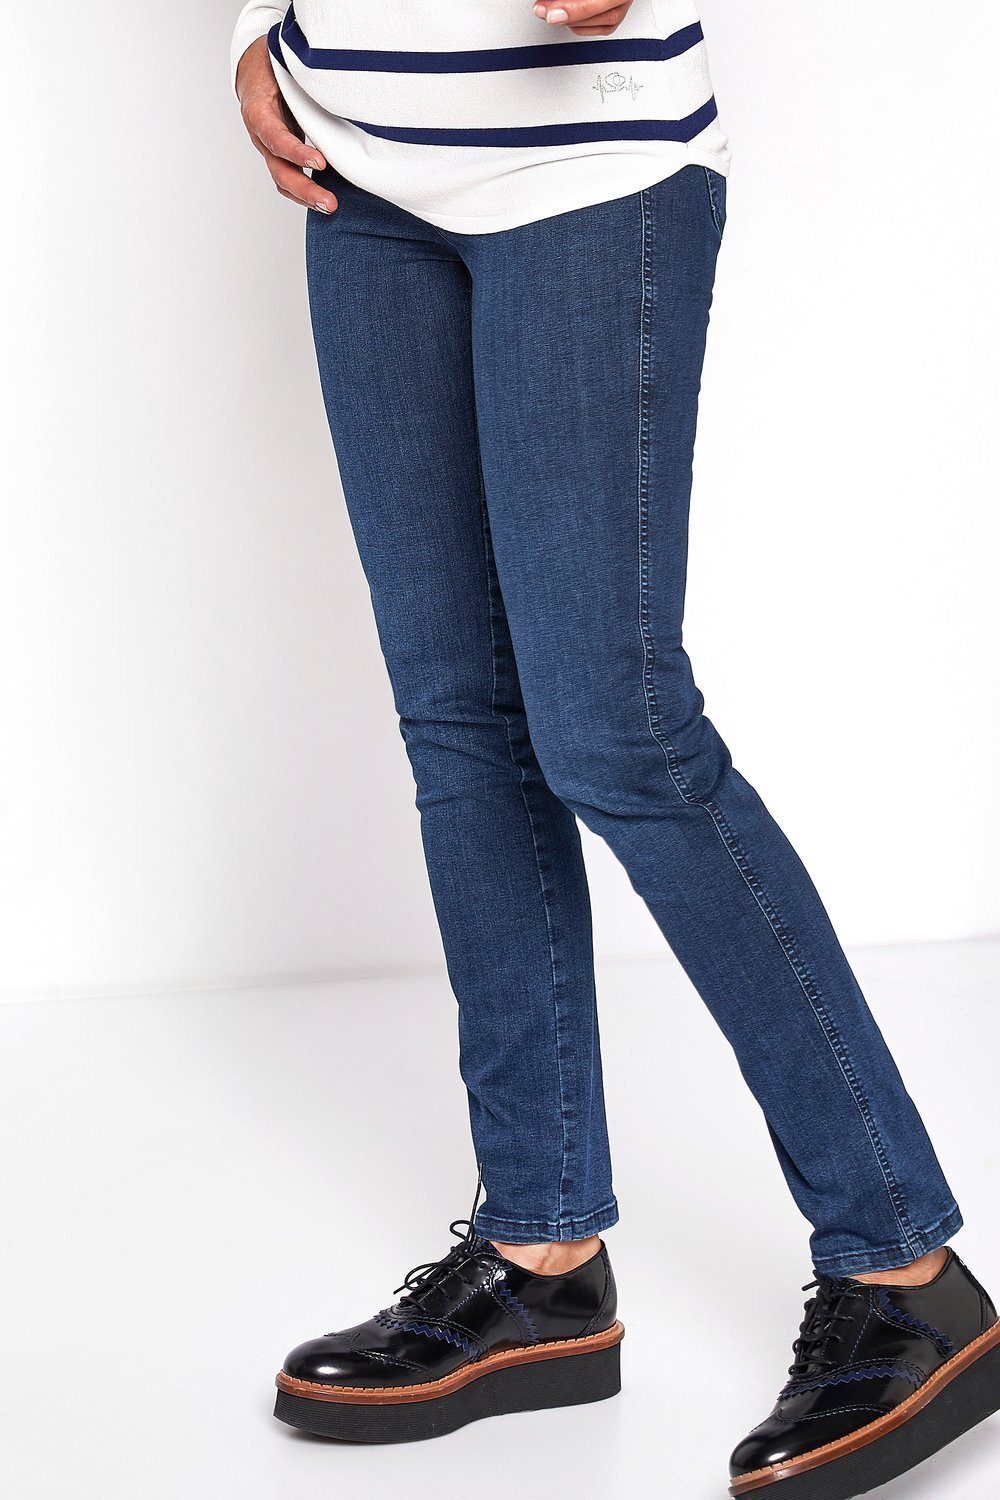 TONI 5-Pocket-Jeans be loved mit hoher Leibhöhe dunkelblau - 582